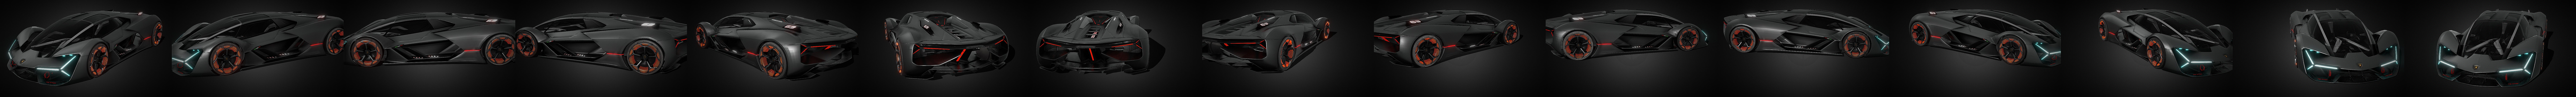 Lamborghini-terzo-millennio 3D models - Sketchfab